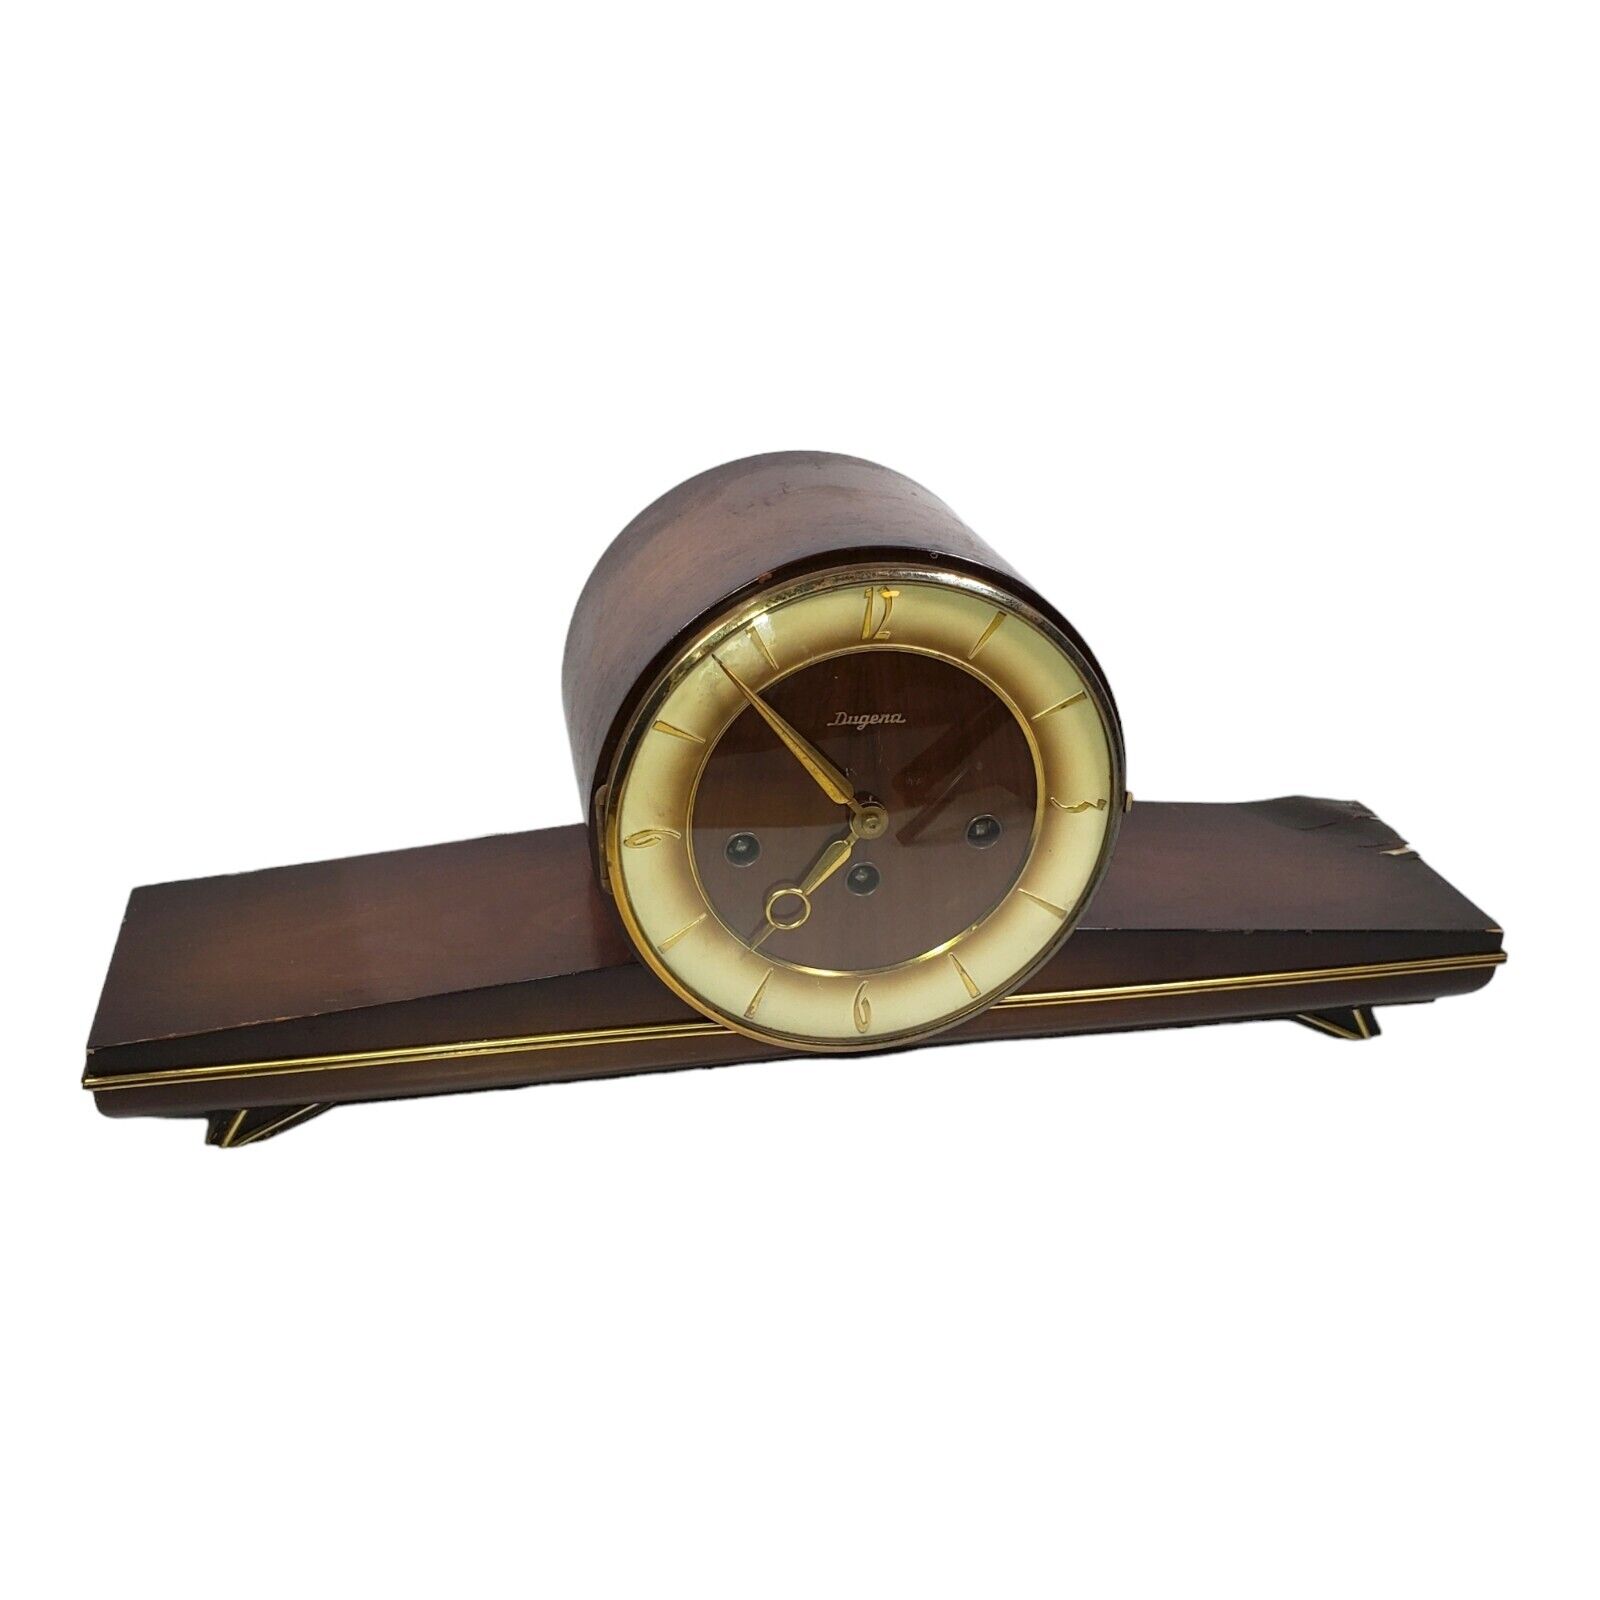 1961 Dugena Chime Mantel Clock FHS Germany Movement # 340-020 for Restoration